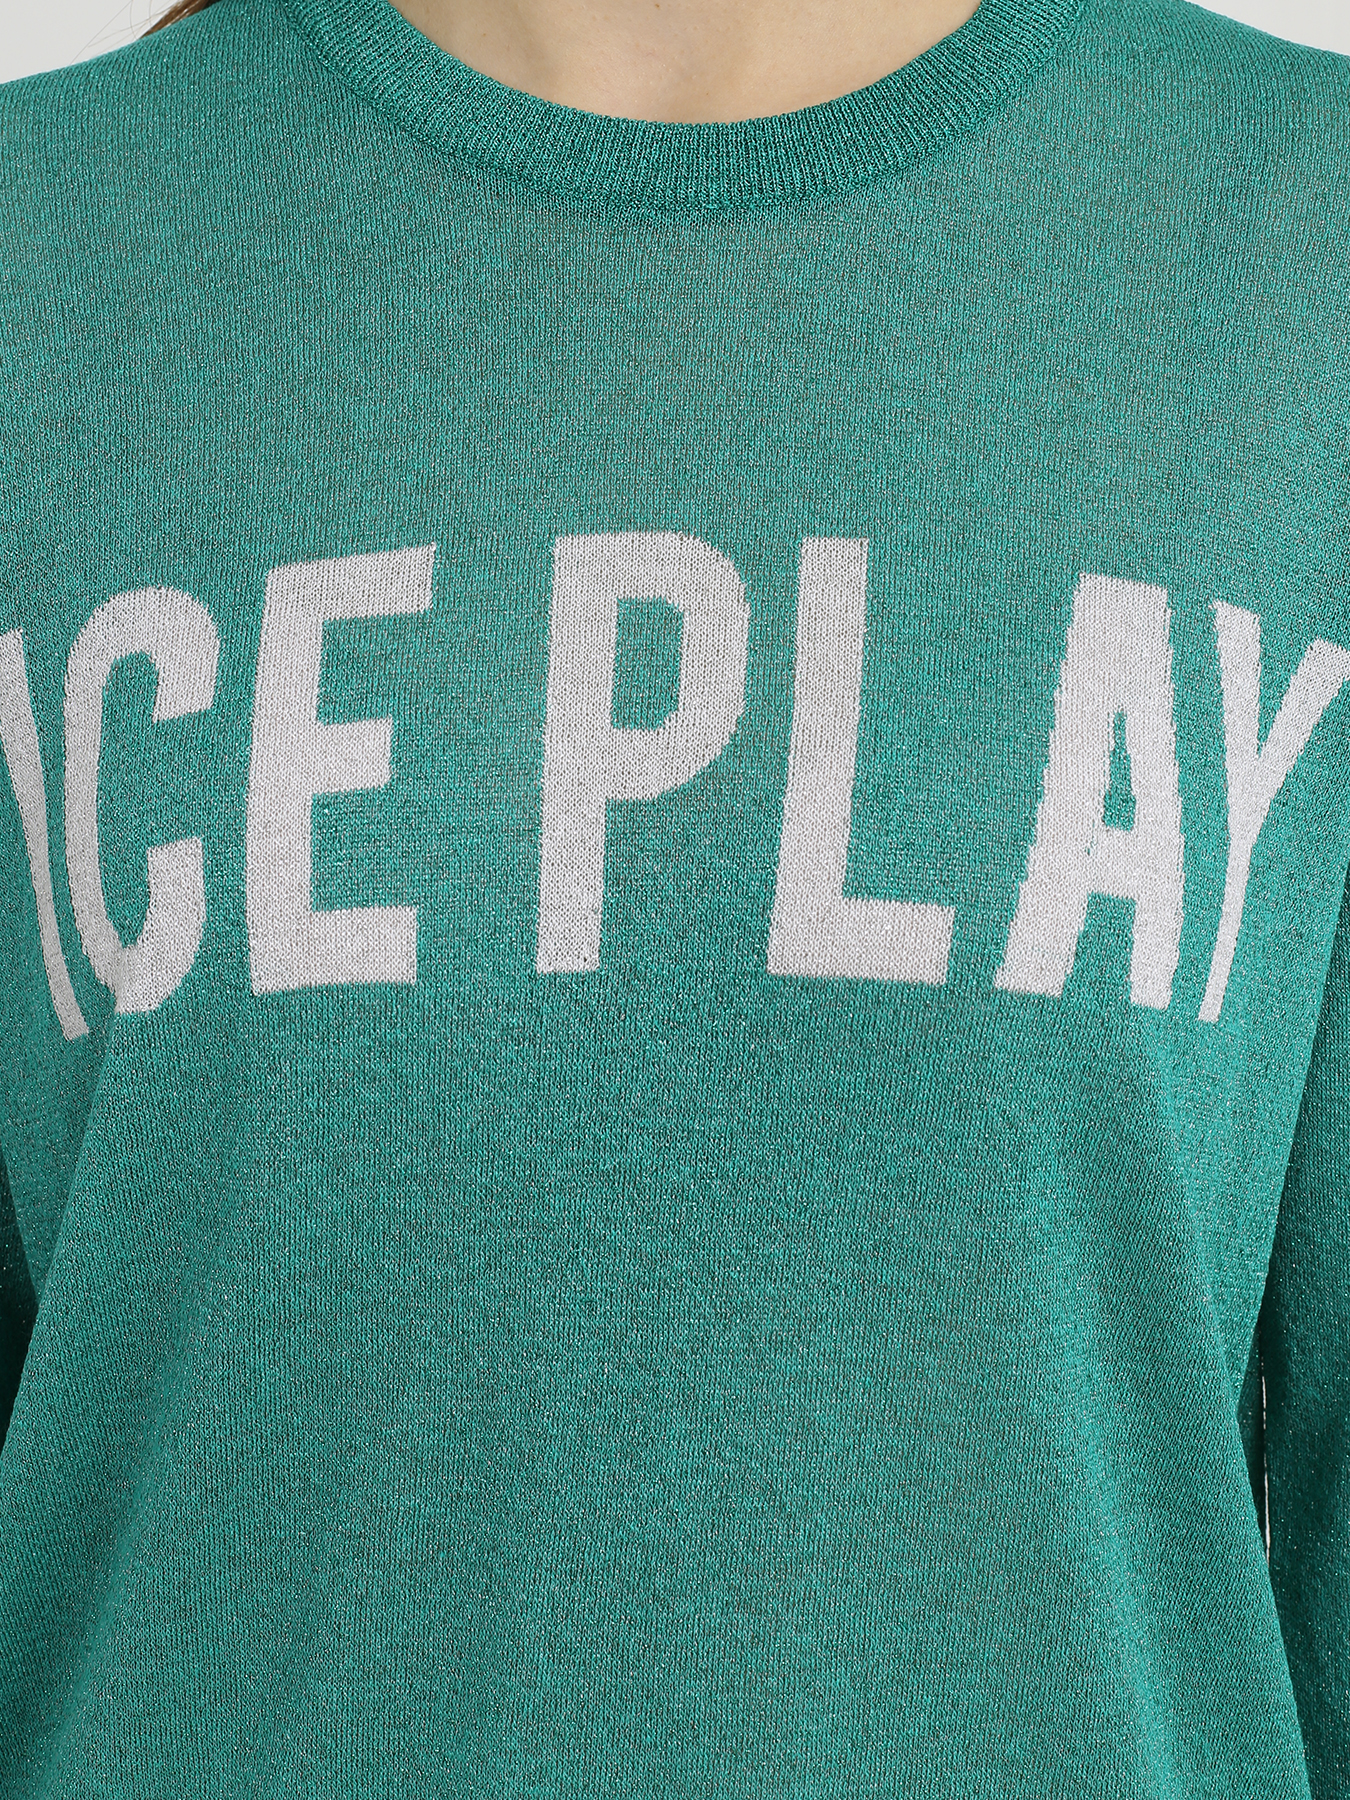 Ice Play Блестящий джемпер с лого 343744-043 Фото 3